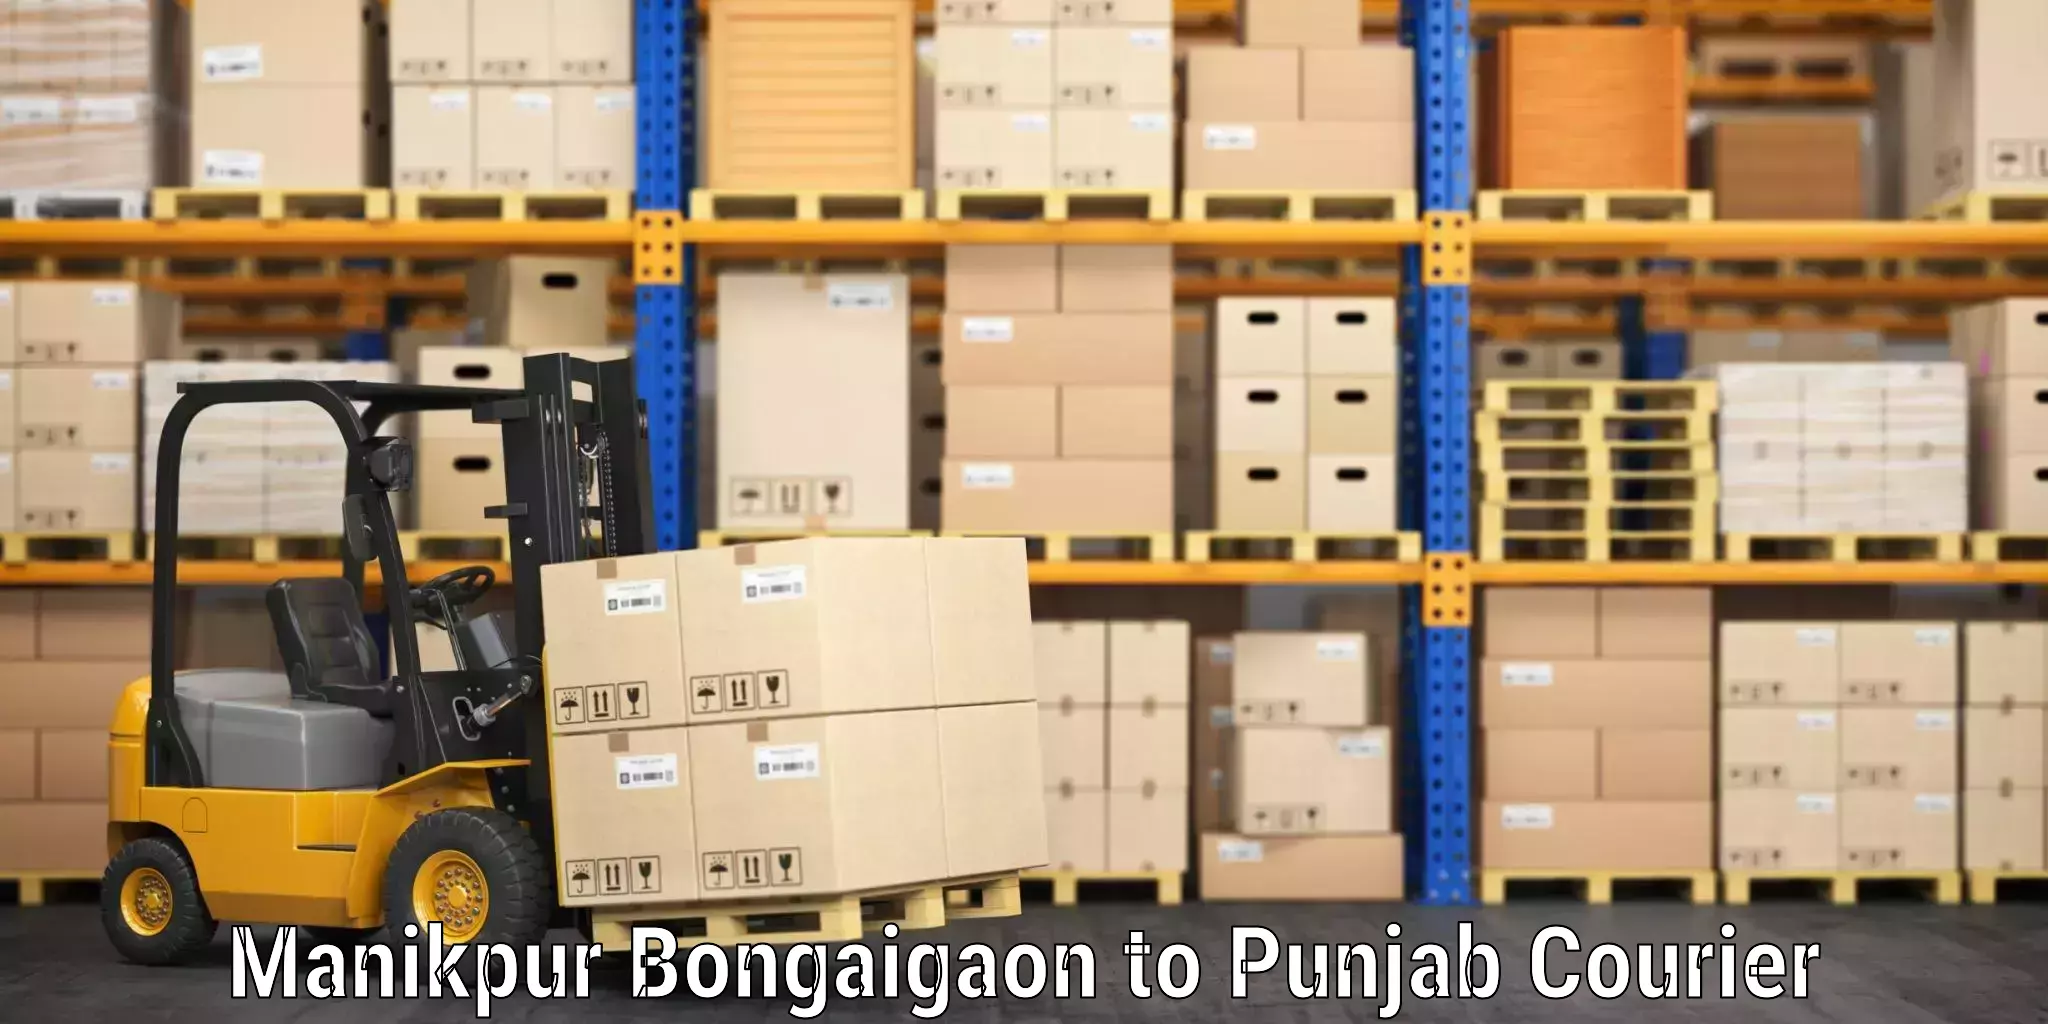 Luggage shipment specialists Manikpur Bongaigaon to Punjab